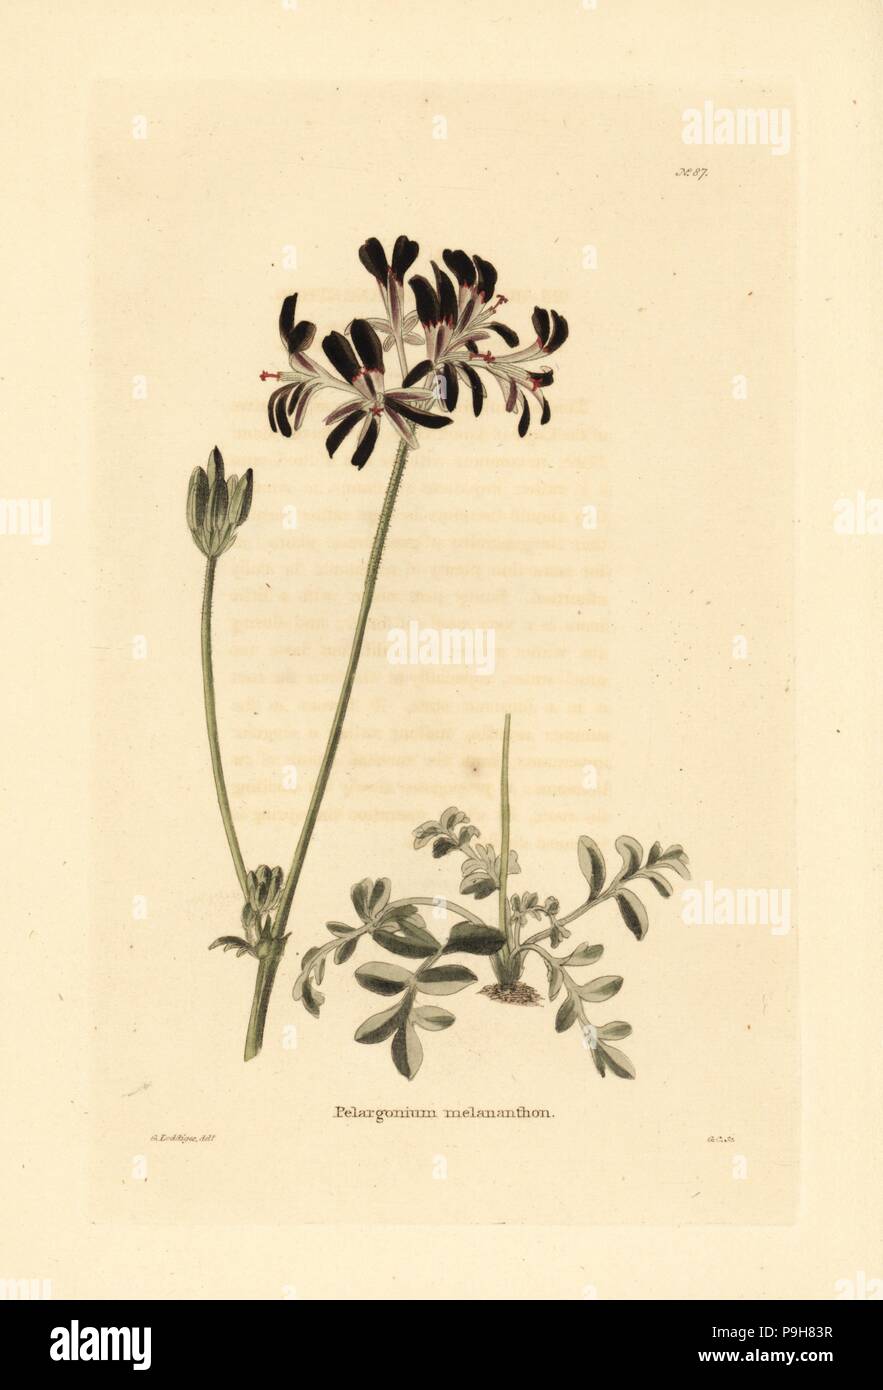 Pelargonium auritum (Pelargonium melananthon). Handcoloured copperplate engraving by George Cooke after George Loddiges from Conrad Loddiges' Botanical Cabinet, Hackney, 1817. Stock Photo